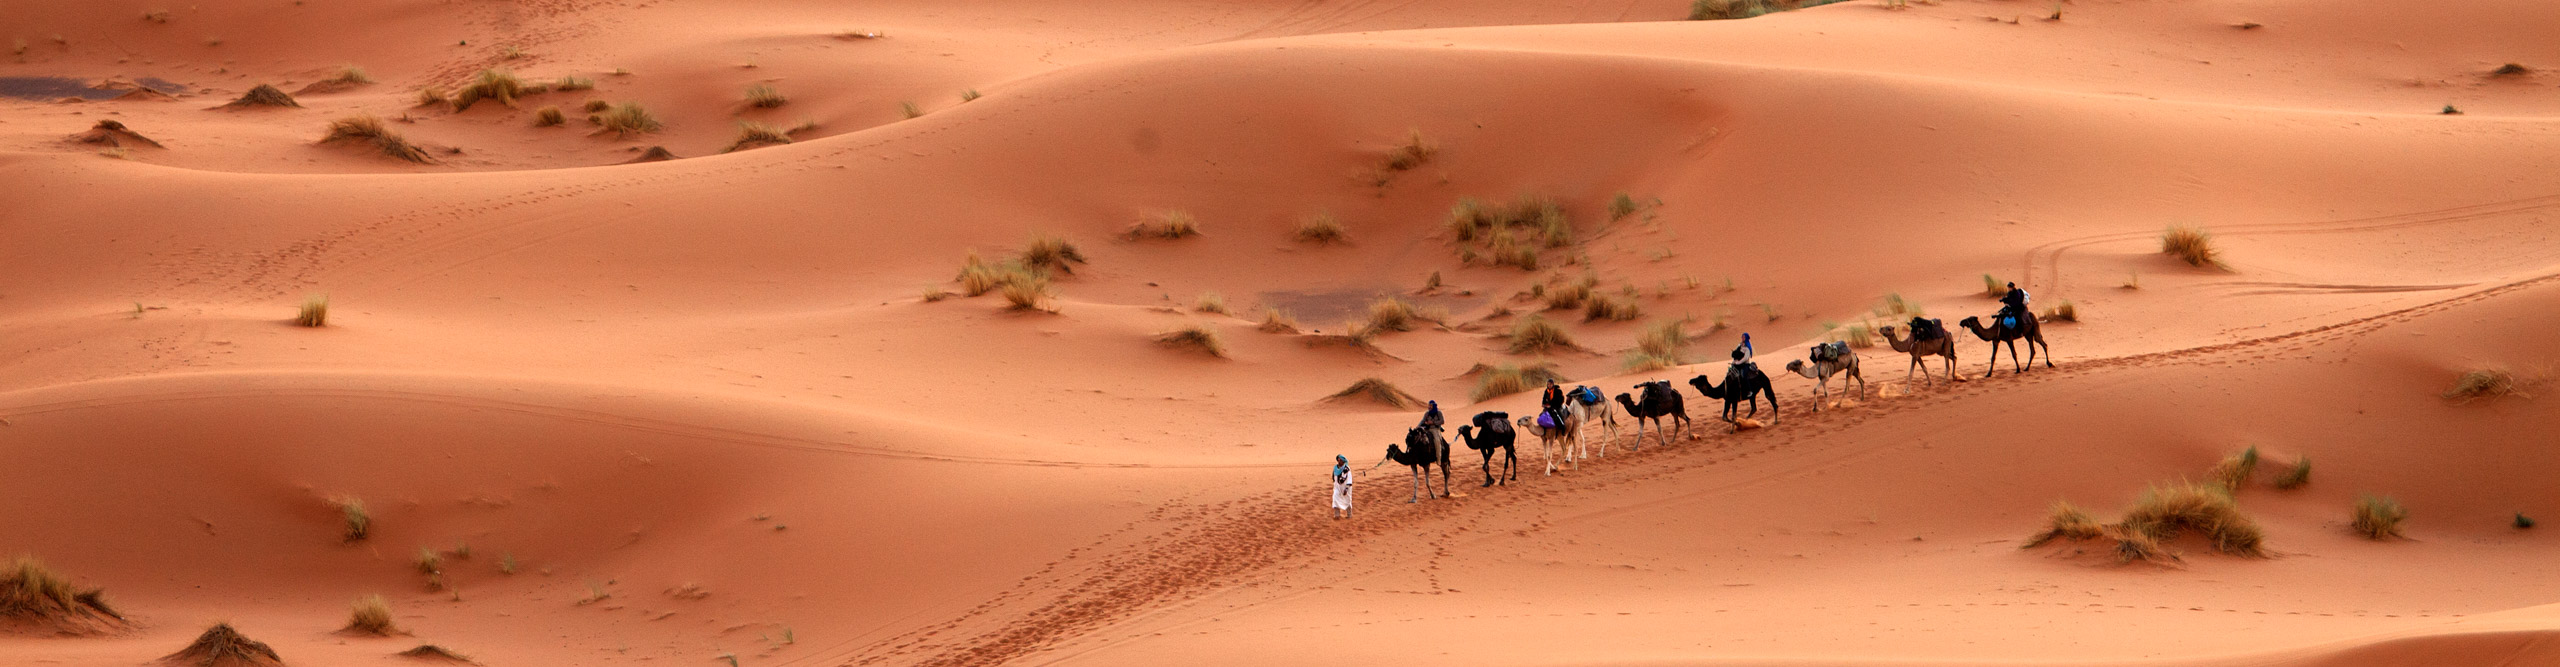 Camel ride caravan on the red sand of the Sahara desert, Tunisia